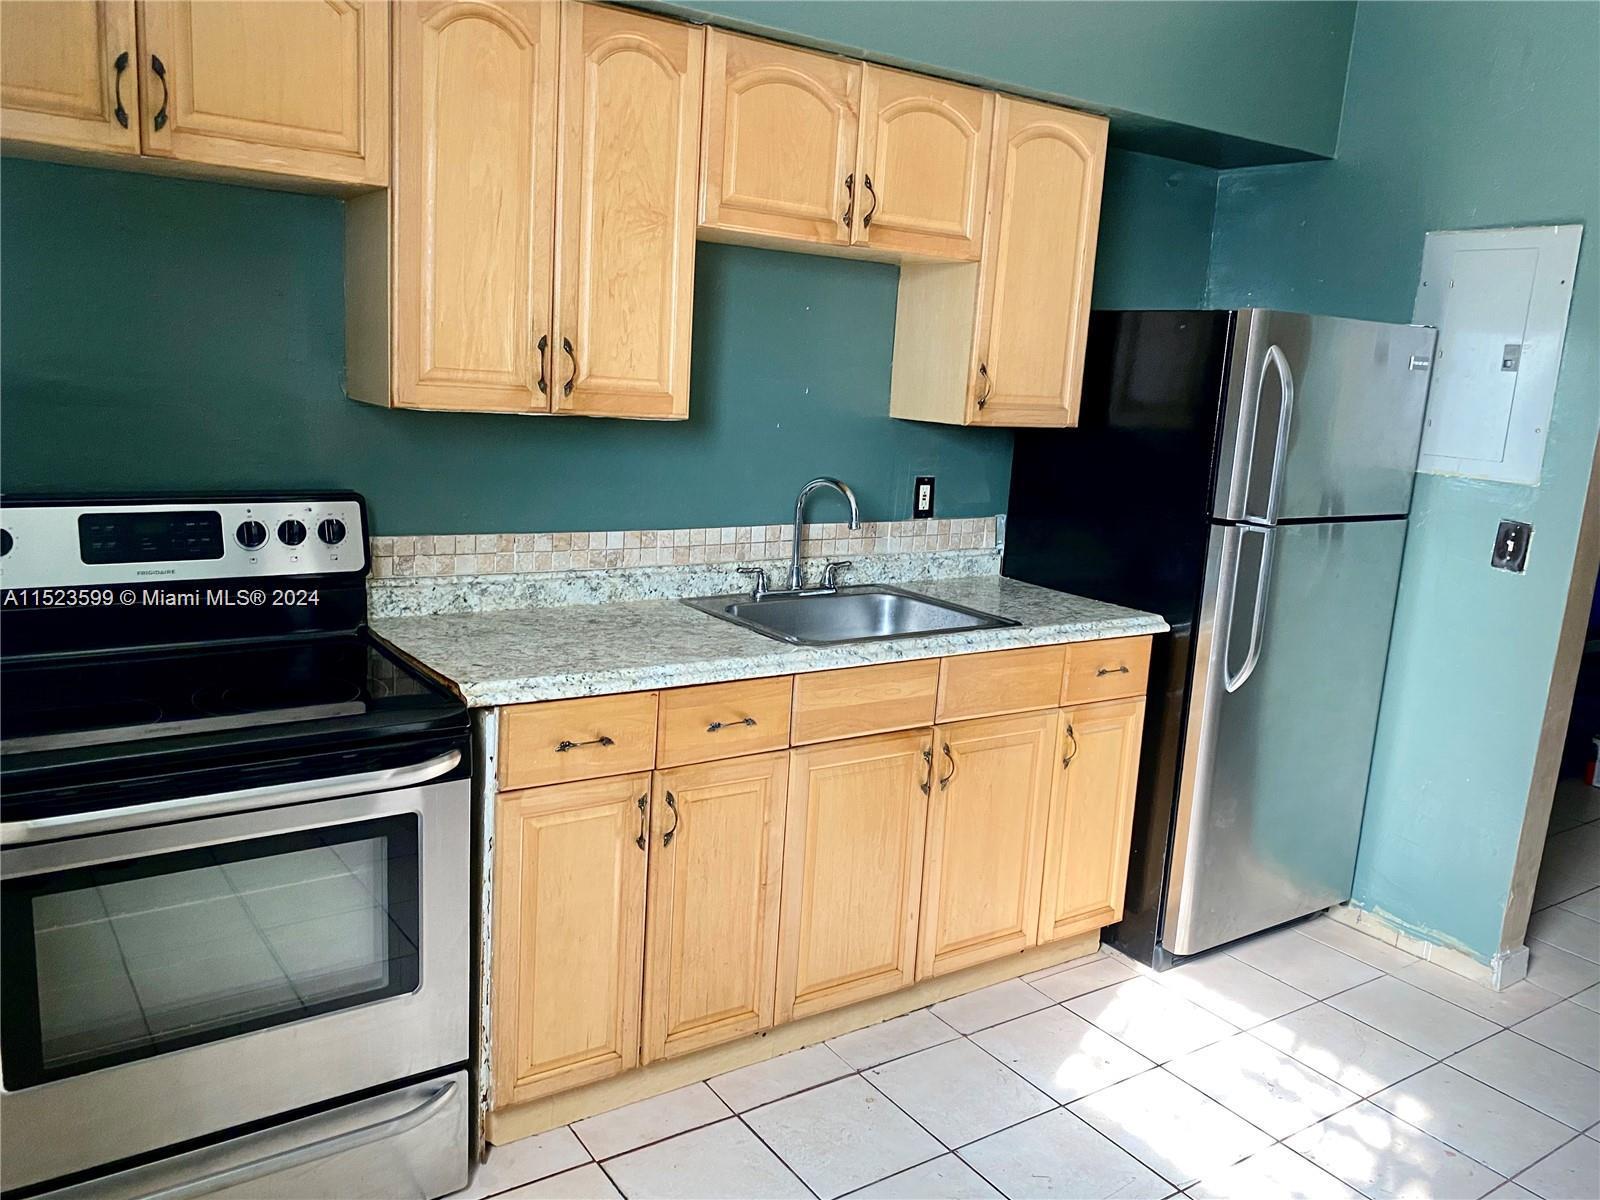 Rental Property at 836 Nw 101st St St F, Miami, Broward County, Florida - Bedrooms: 2 
Bathrooms: 1  - $2,250 MO.